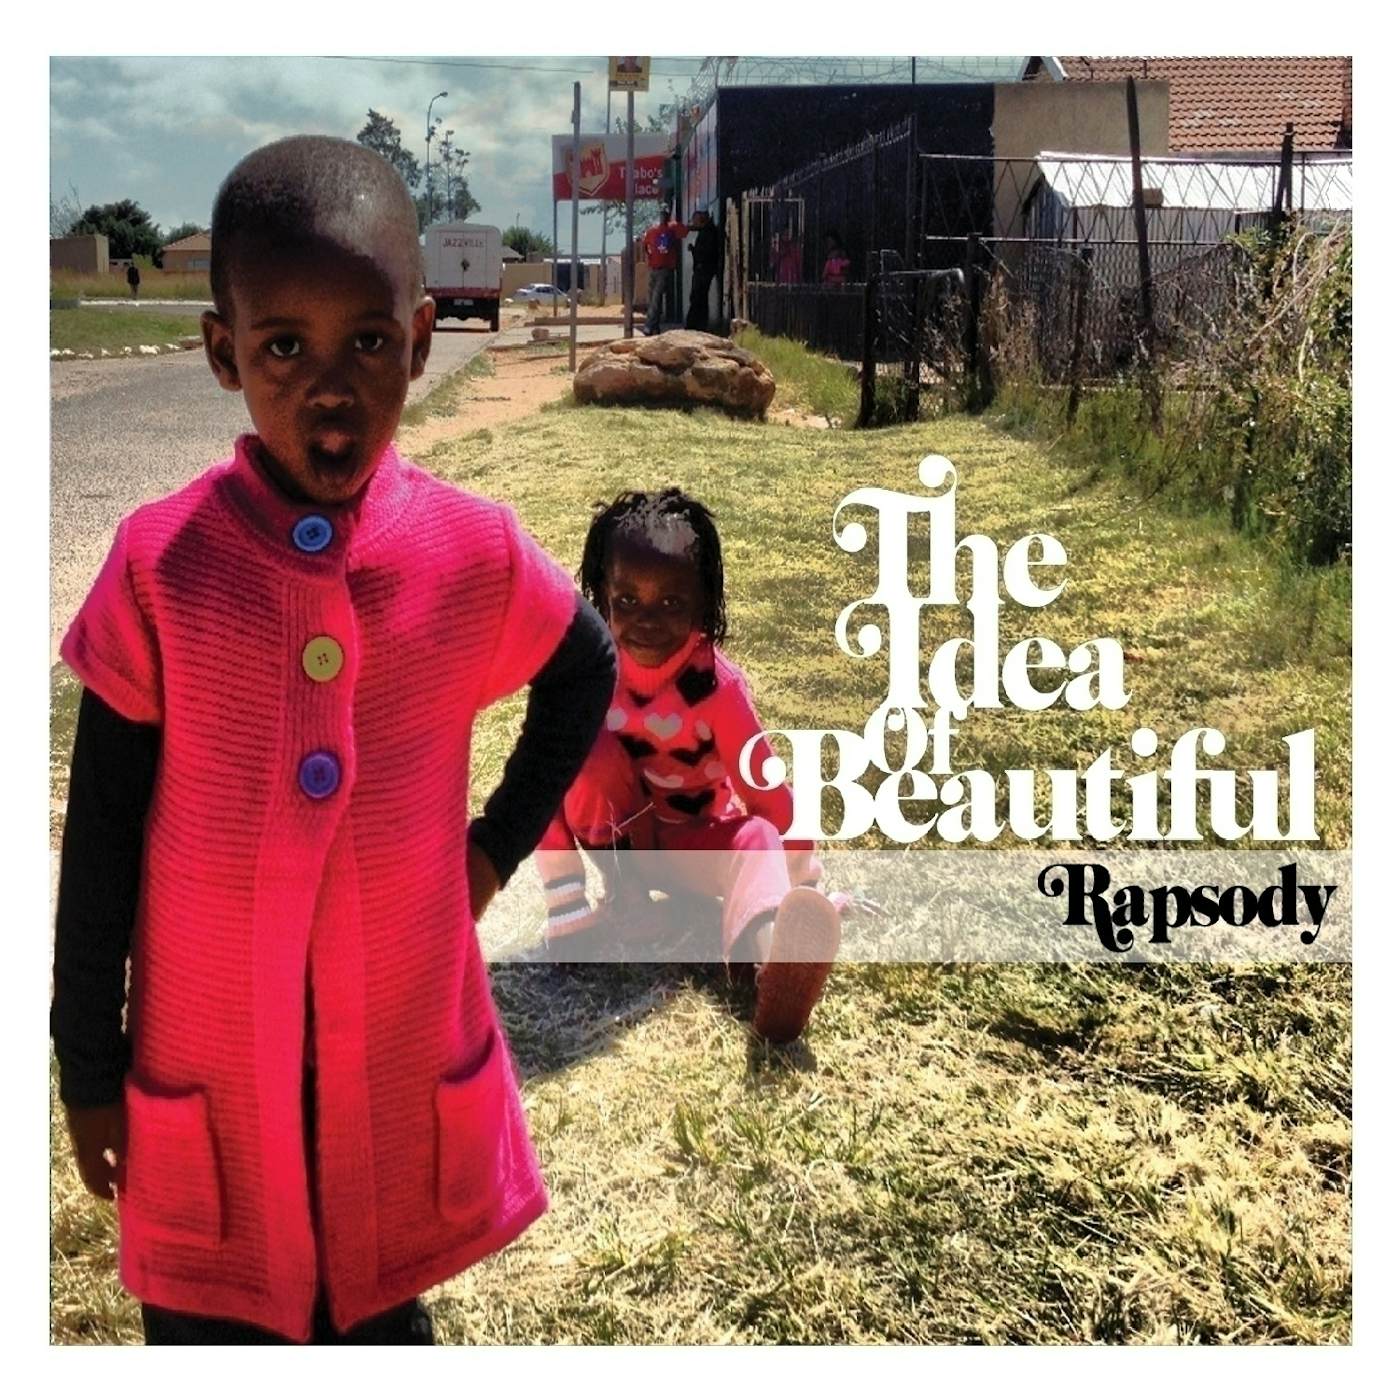 Rapsody The Idea Of Beautiful Vinyl Record